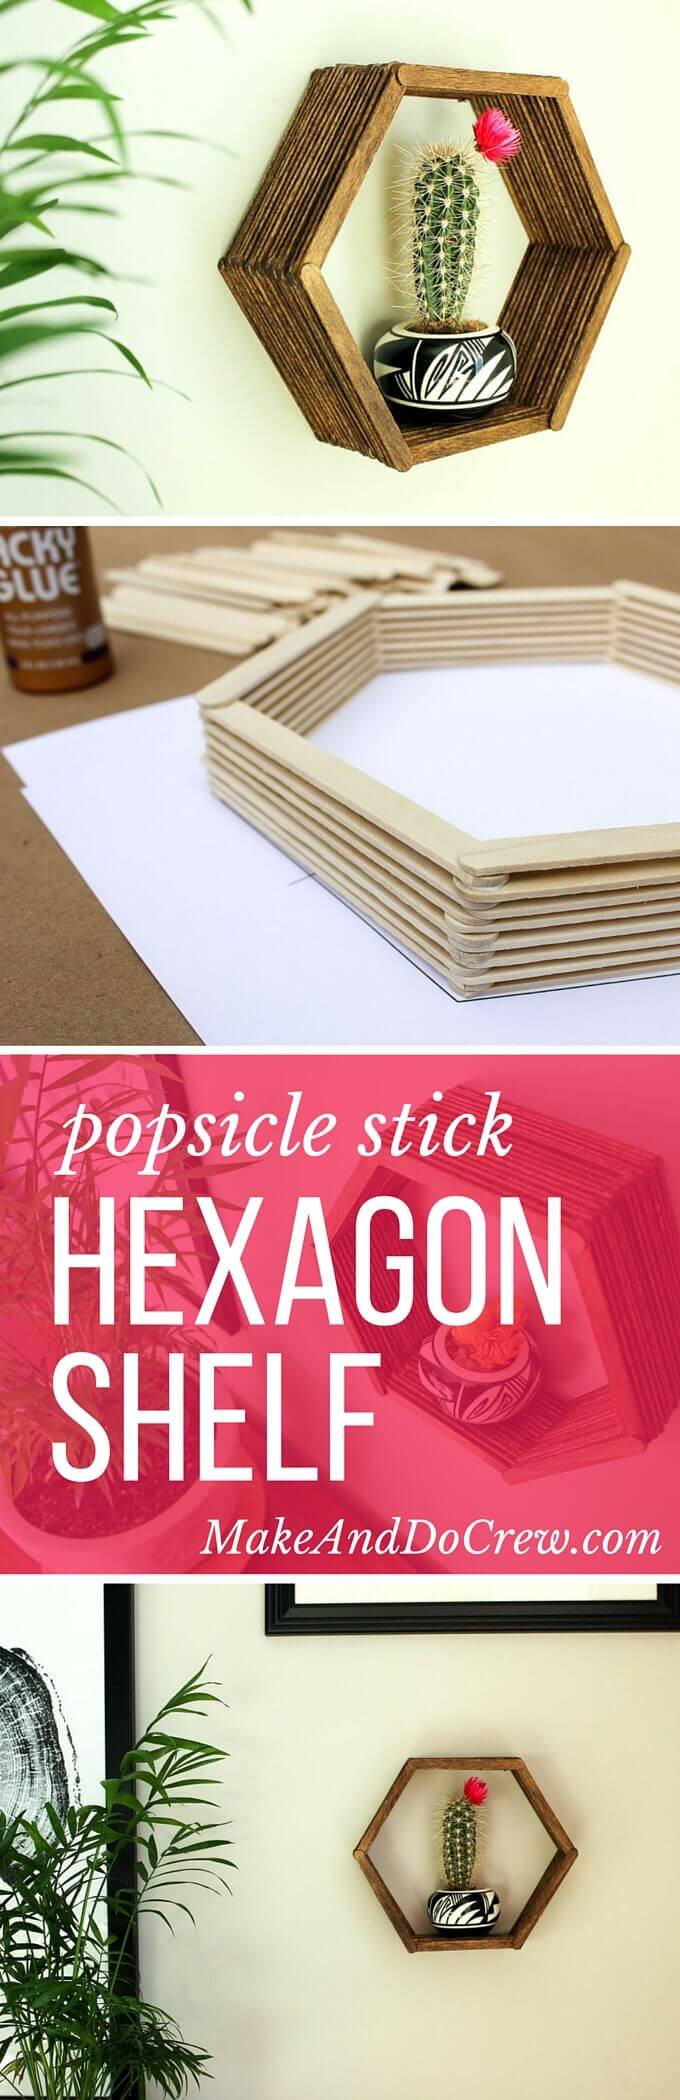 Tramp Art Textured Popsicle Stick Shelf